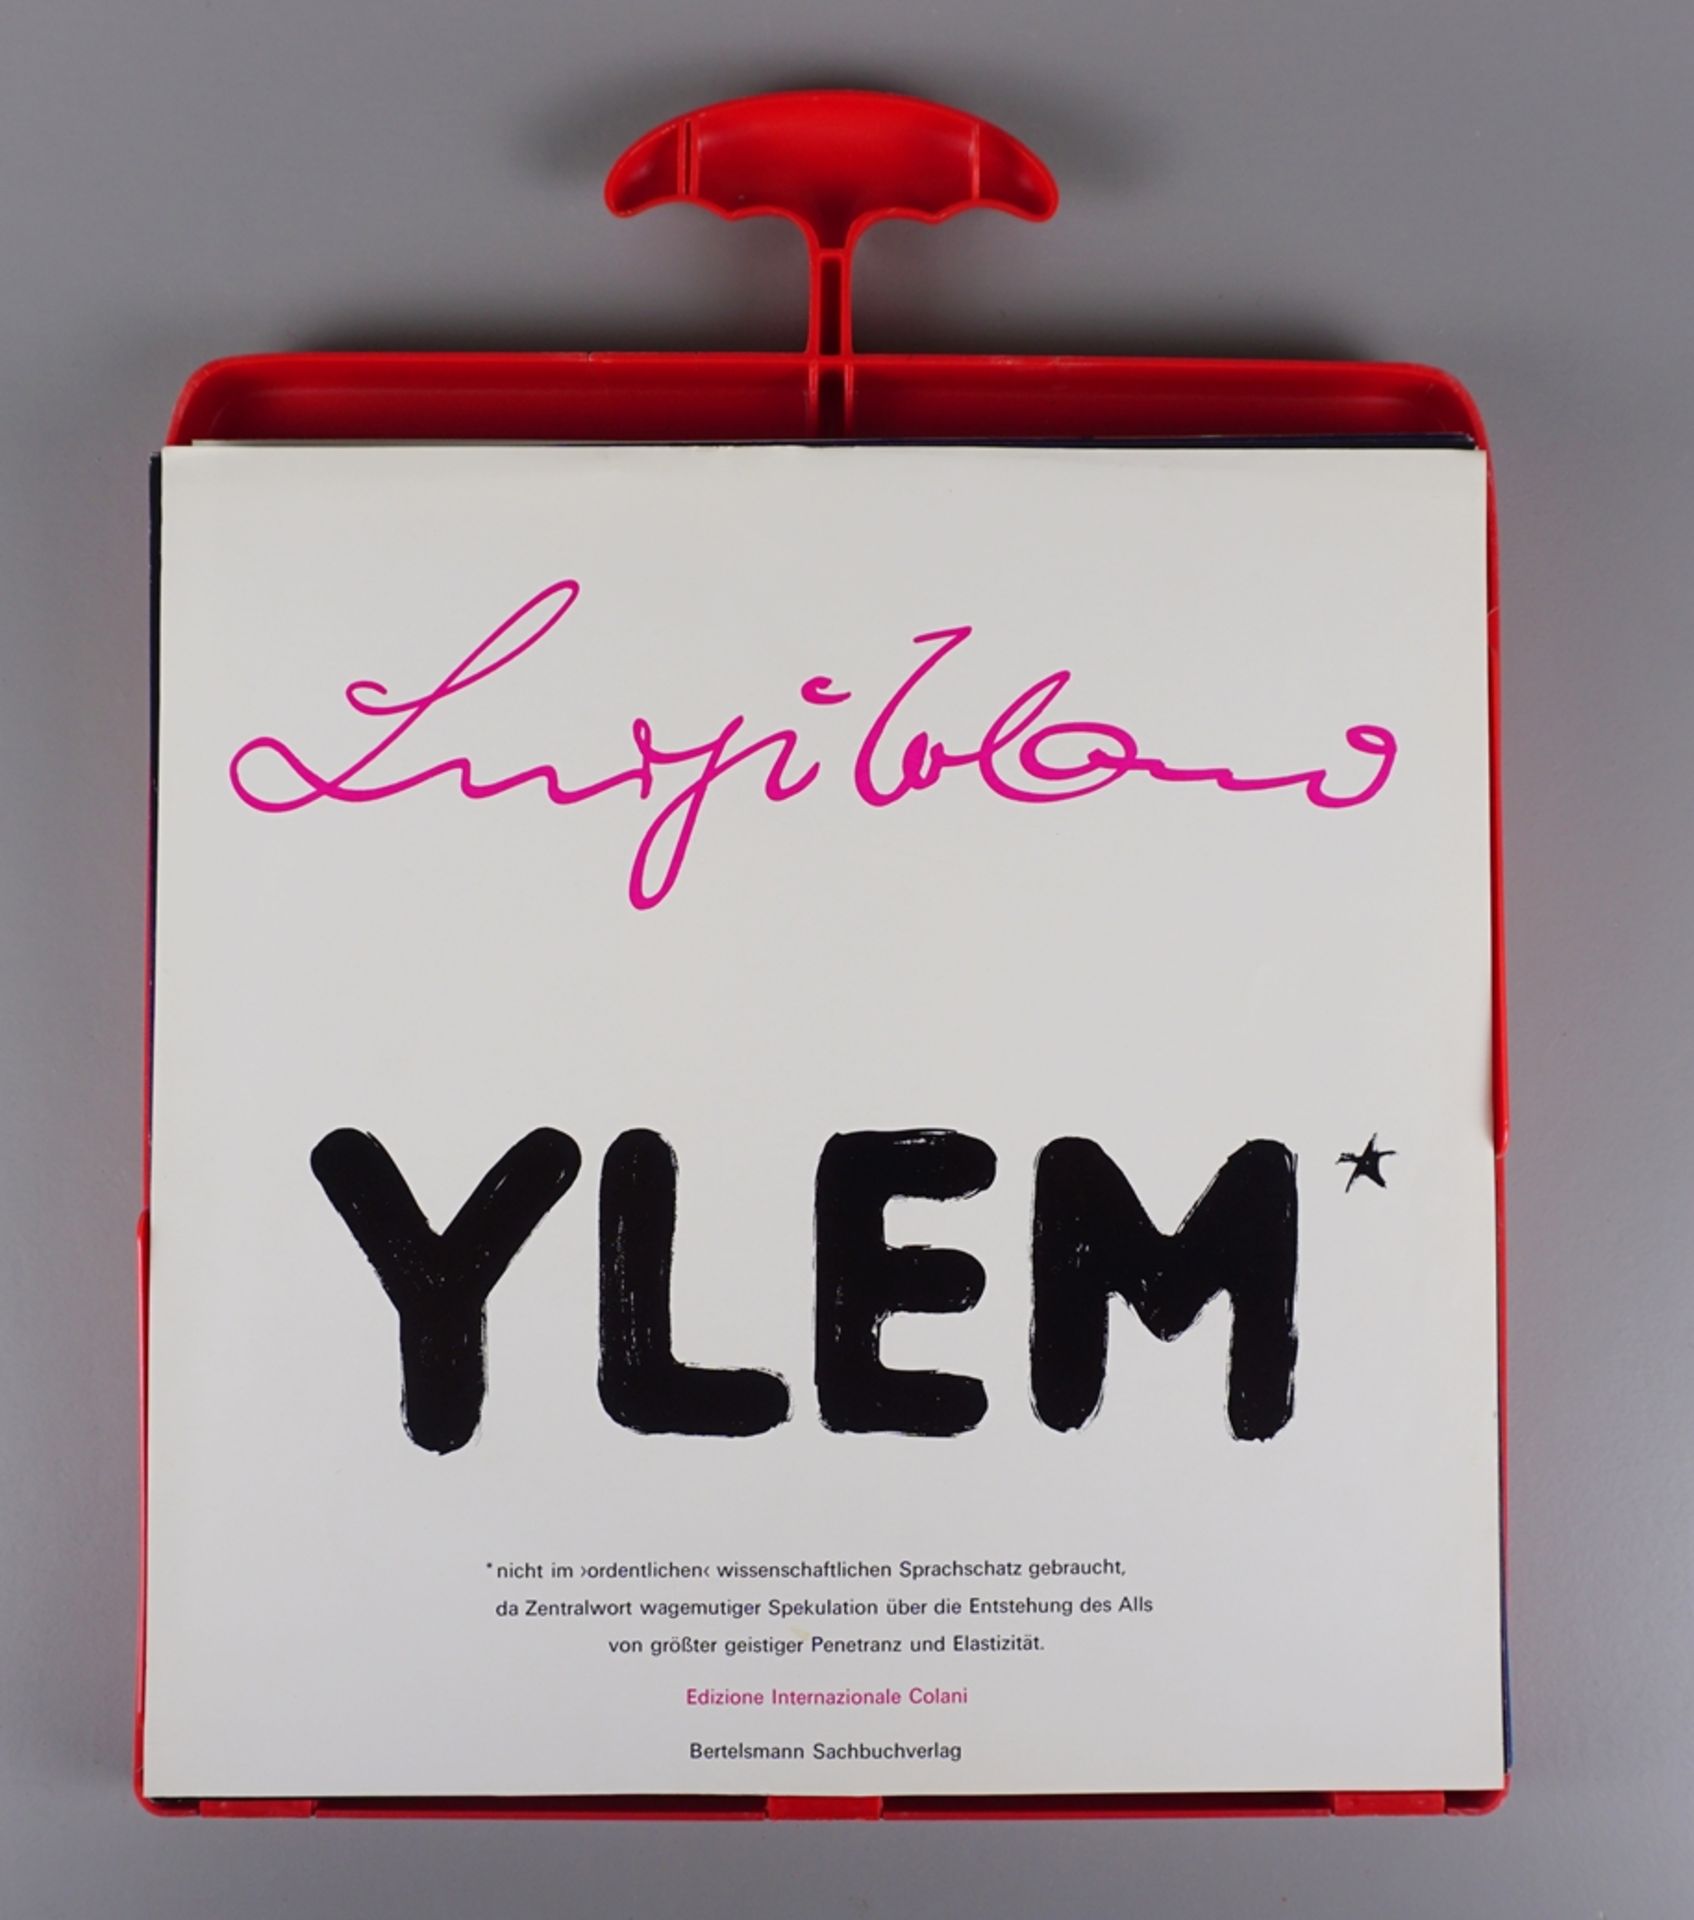 Luigi Colani, YLEM, 1971, Kassette mit Design-Entwürfen - Image 2 of 5